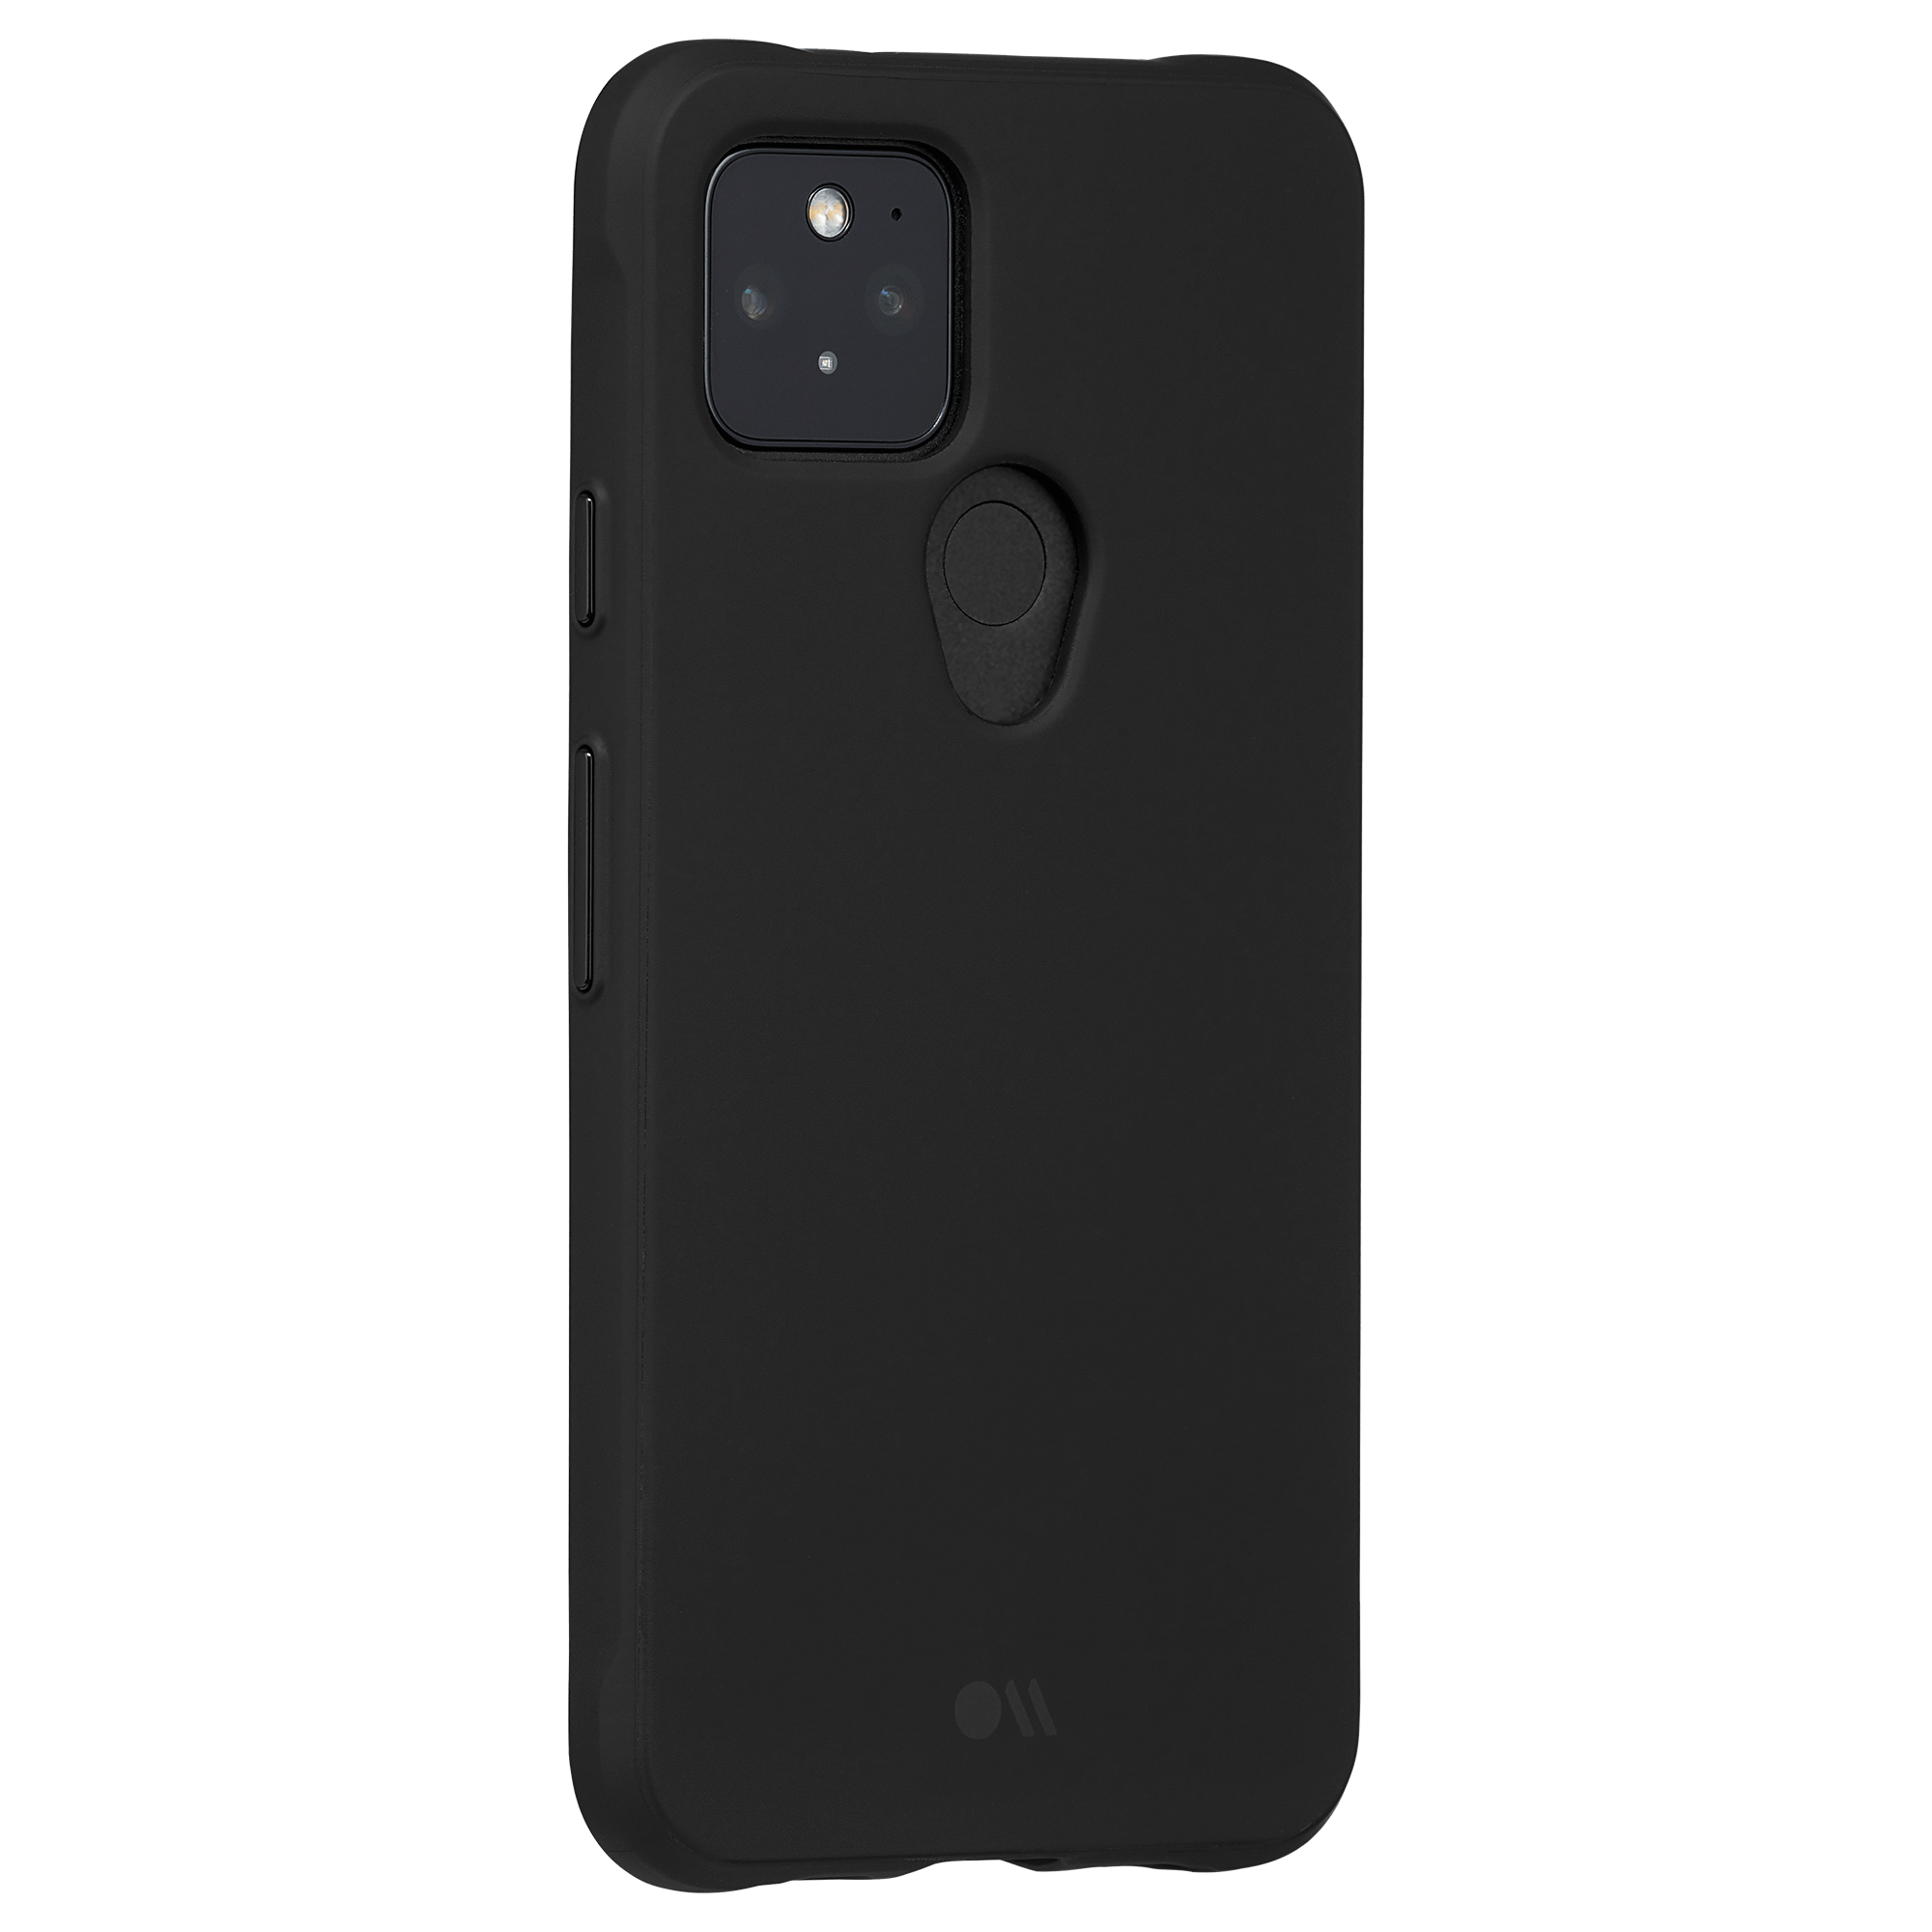 Slim, protective black case for Pixel 5. color::Black